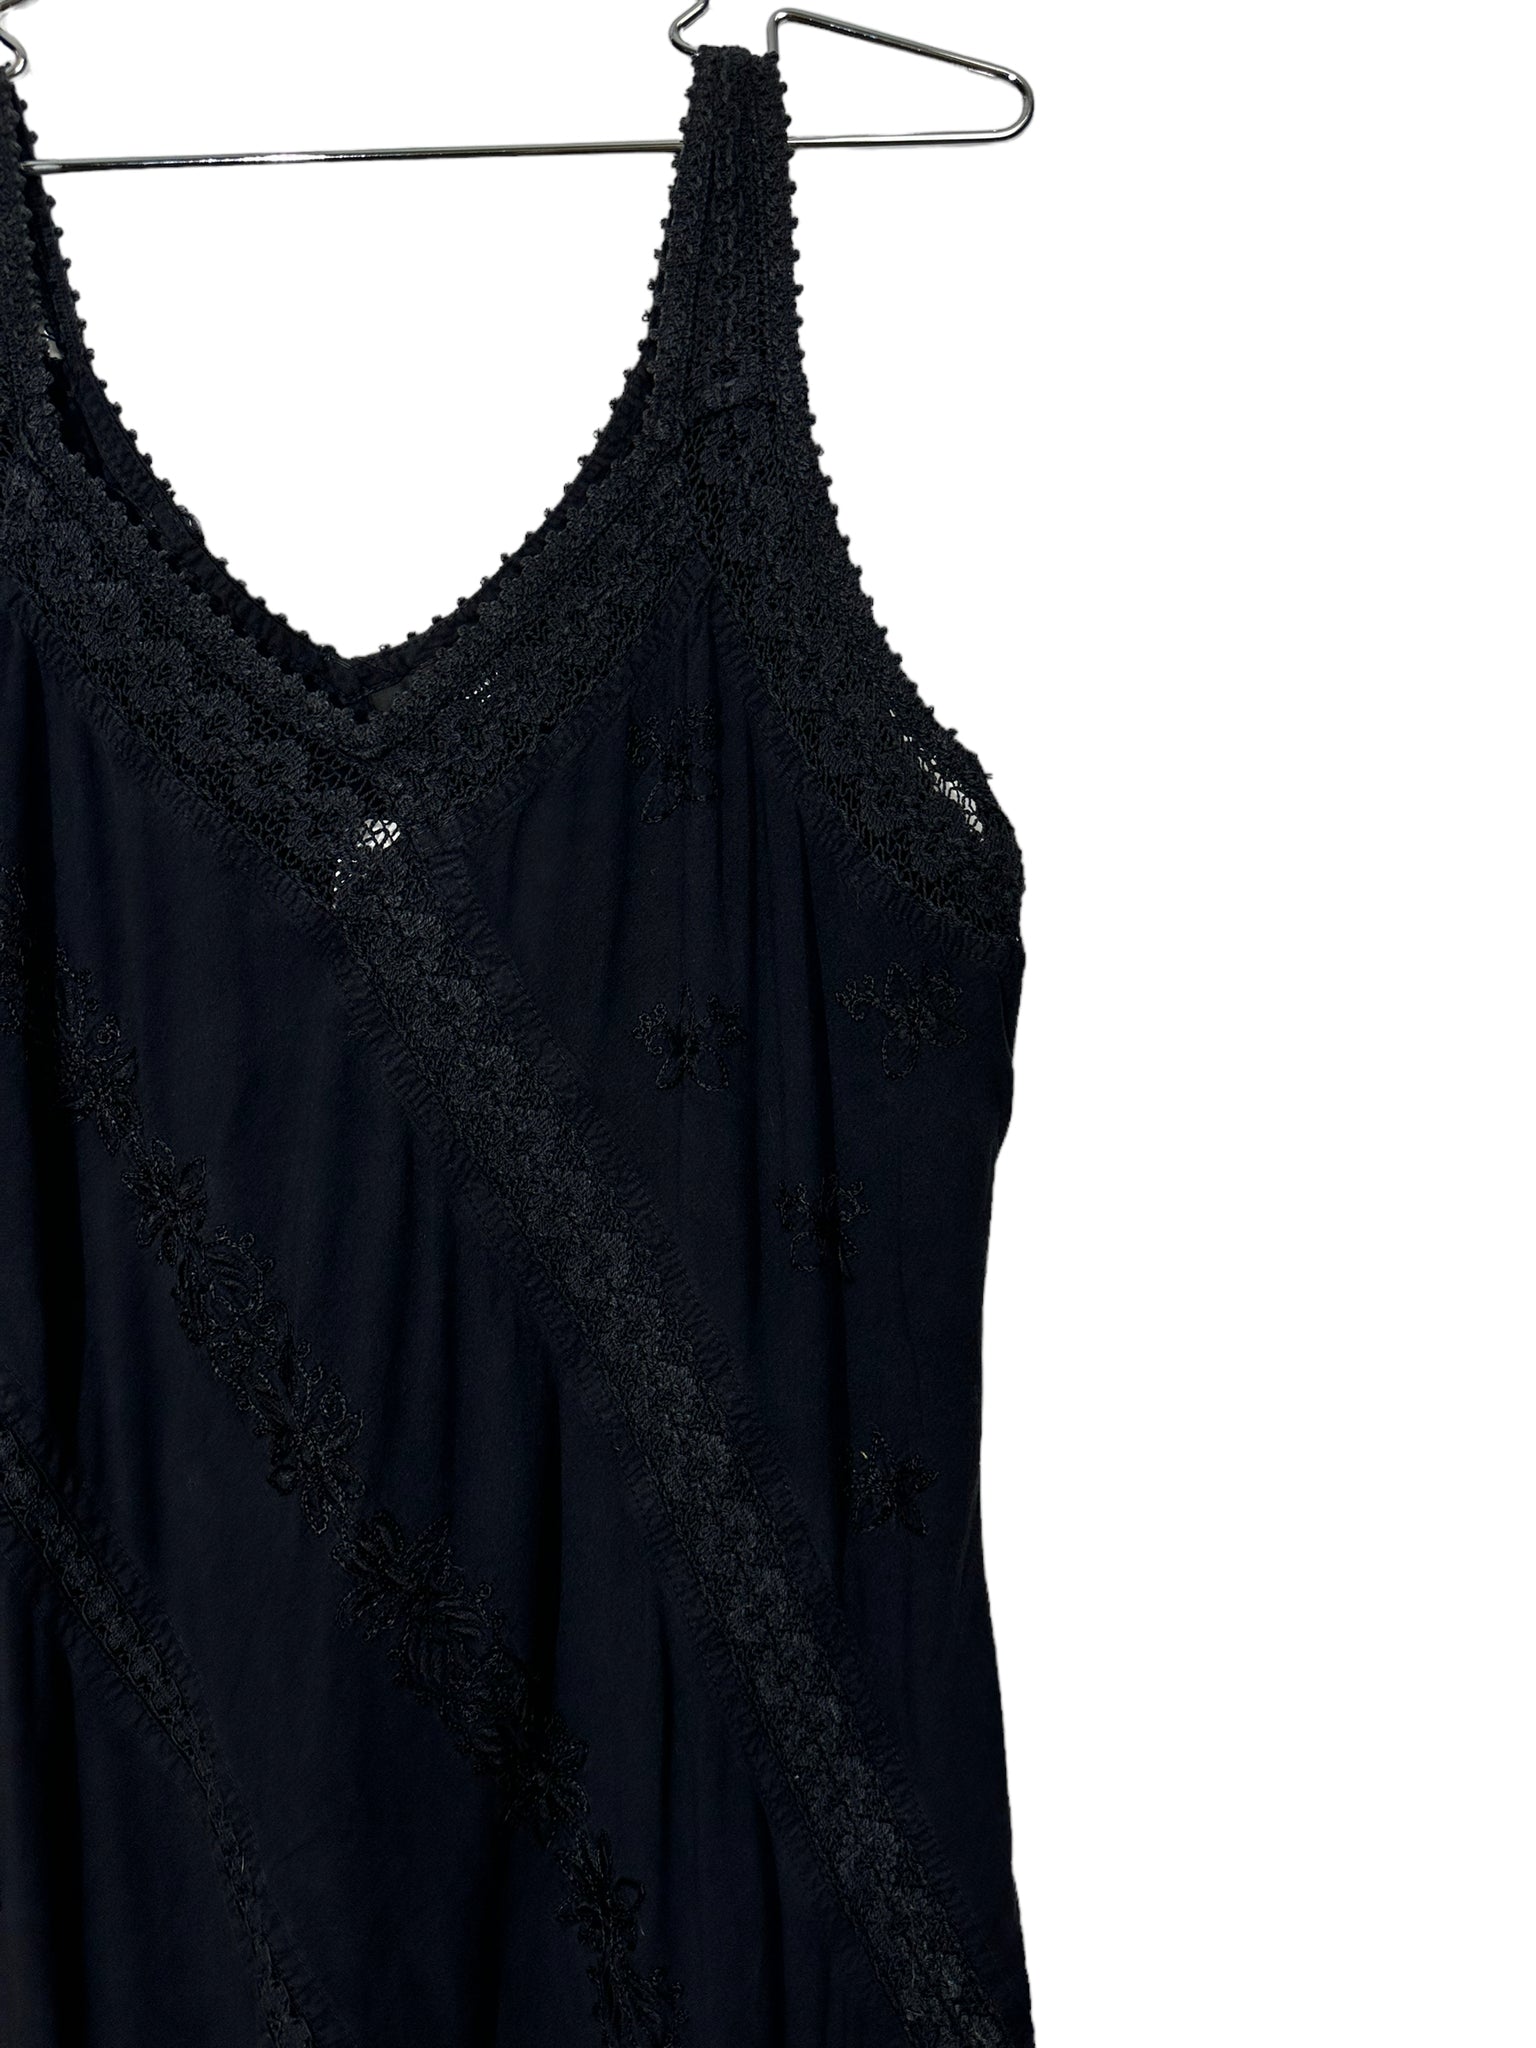 Black Crochet Panel Dress